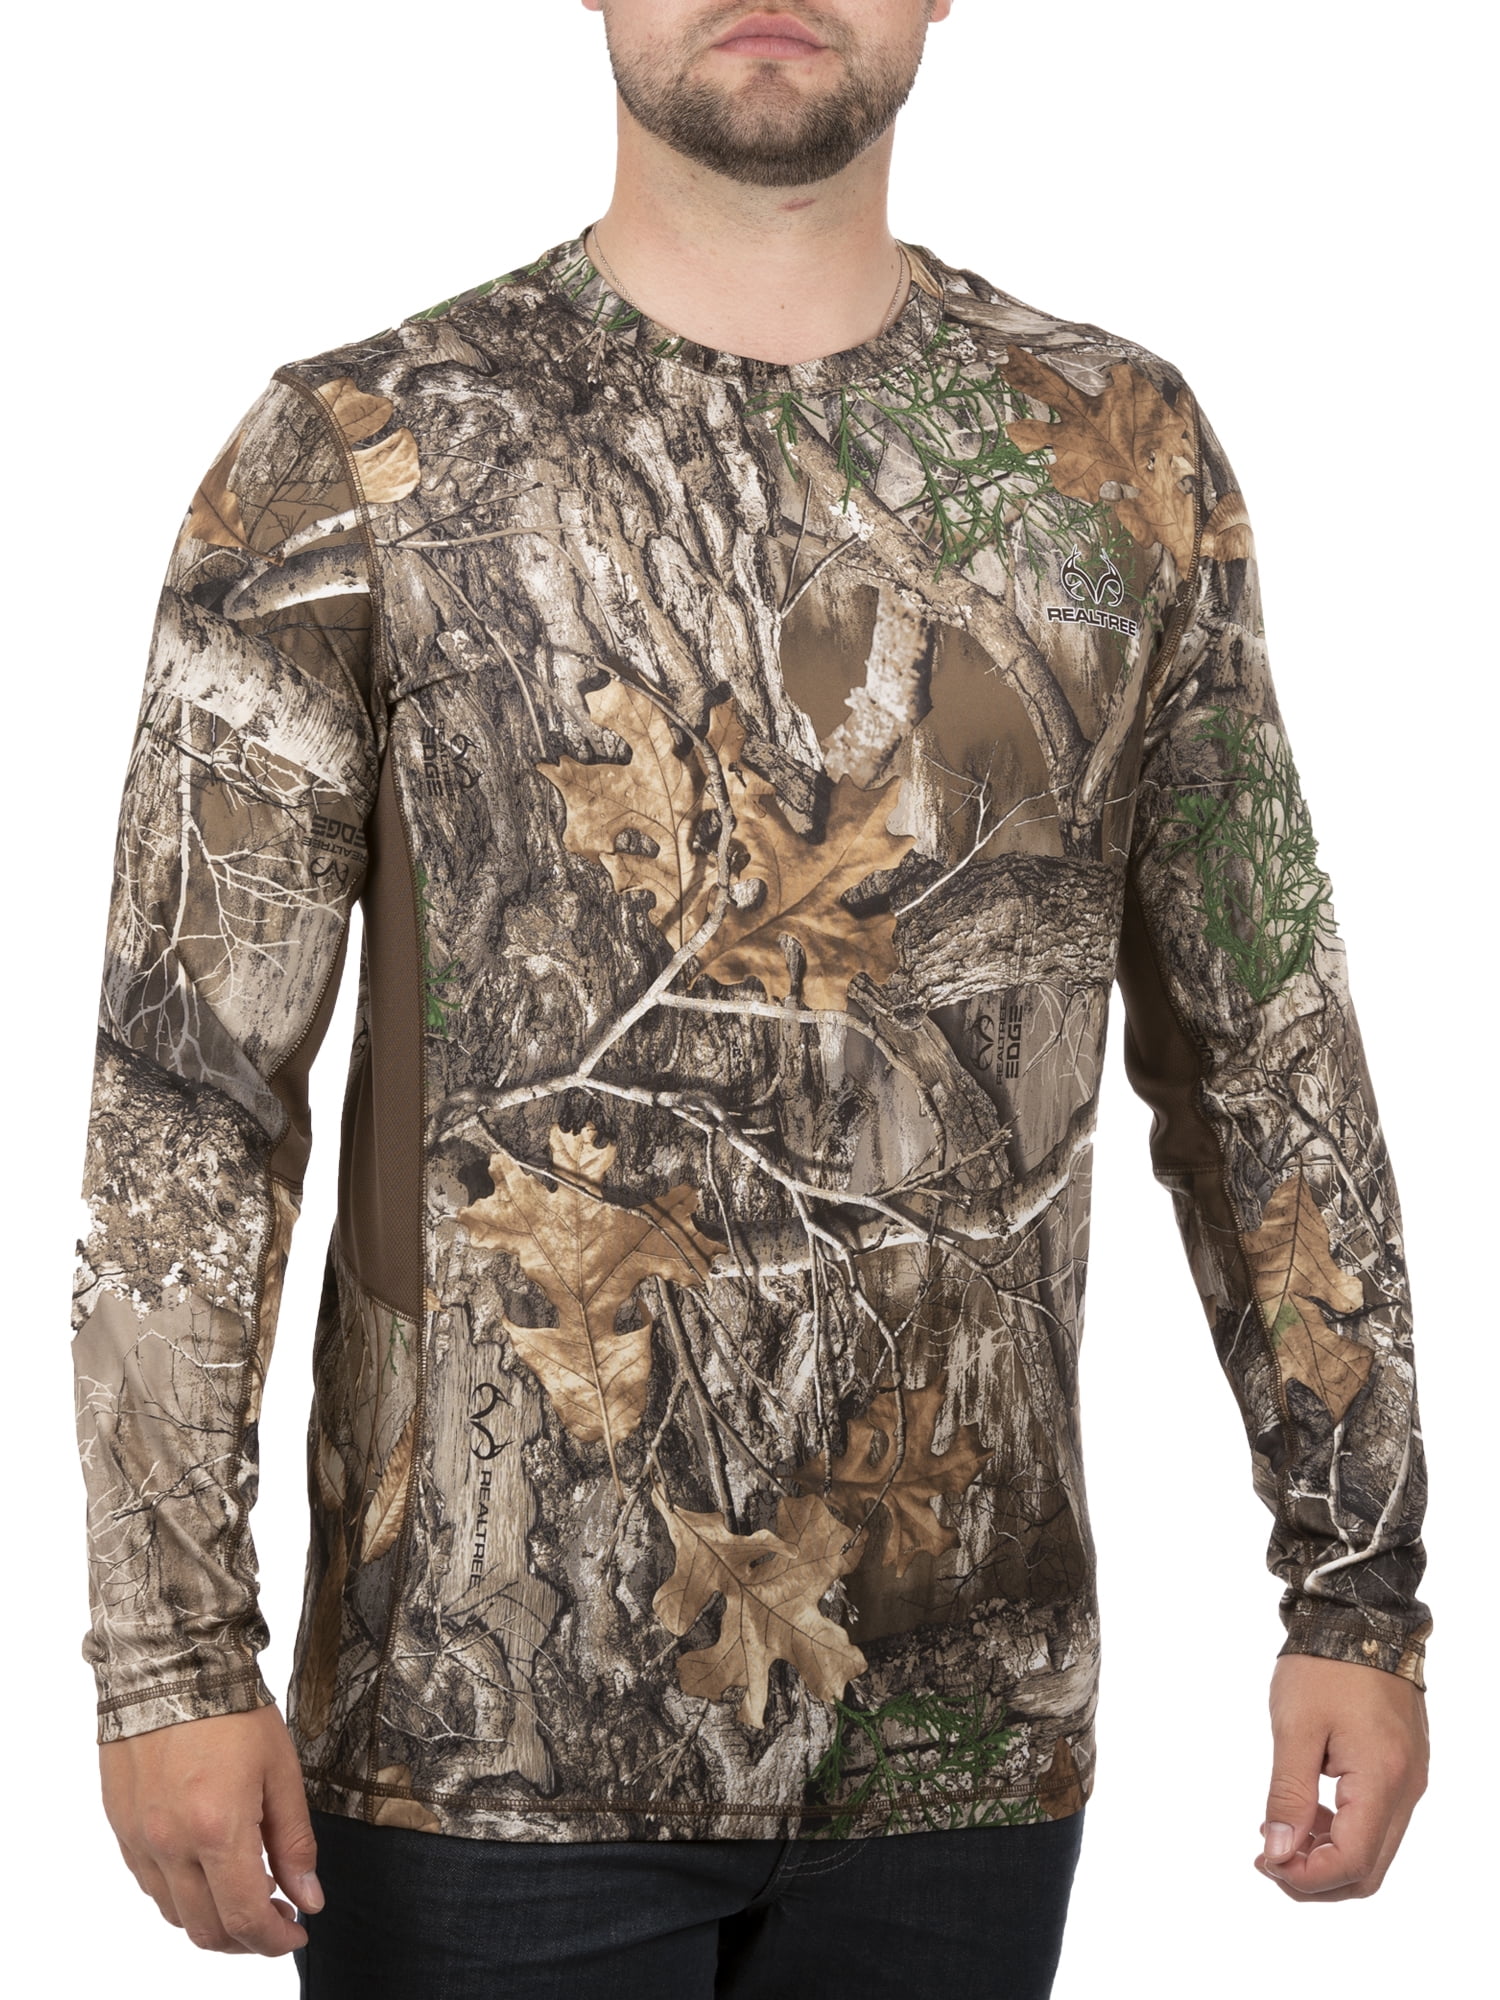 Realtree Edge Men Long Sleeve Performance Hunting Camouflage Tee Shirt